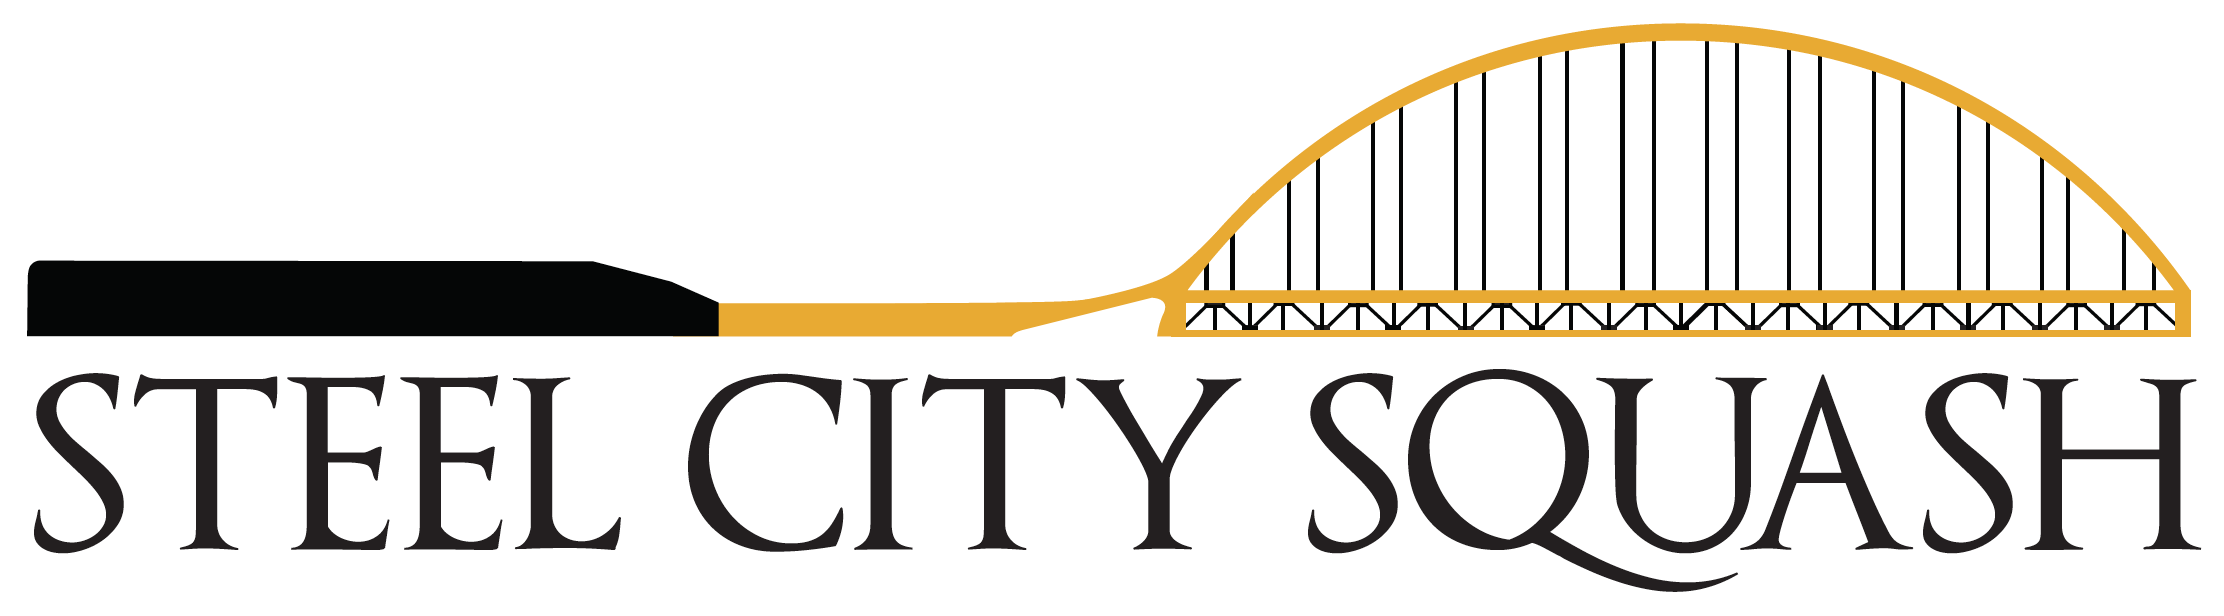 Steel City Squash logo